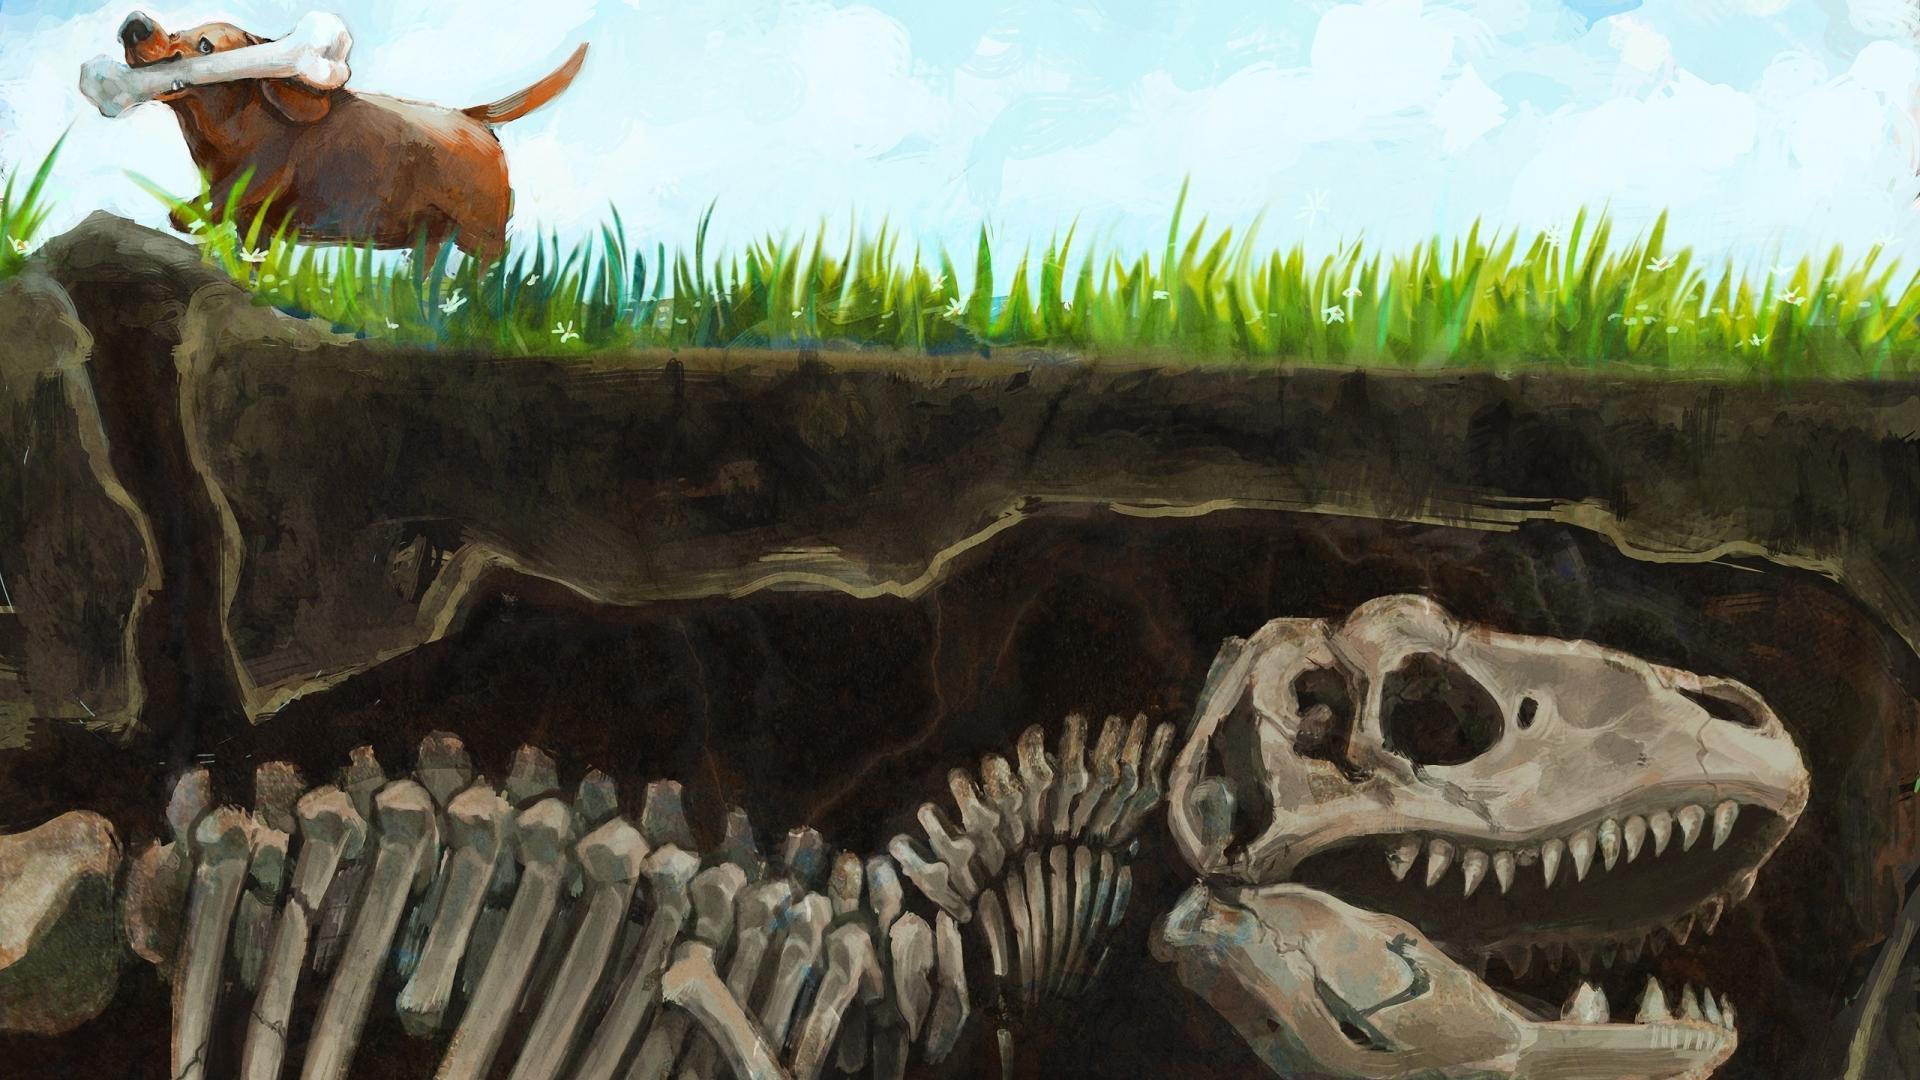 Dinosaurs humor dogs funny skeletons fossil bones wallpaper